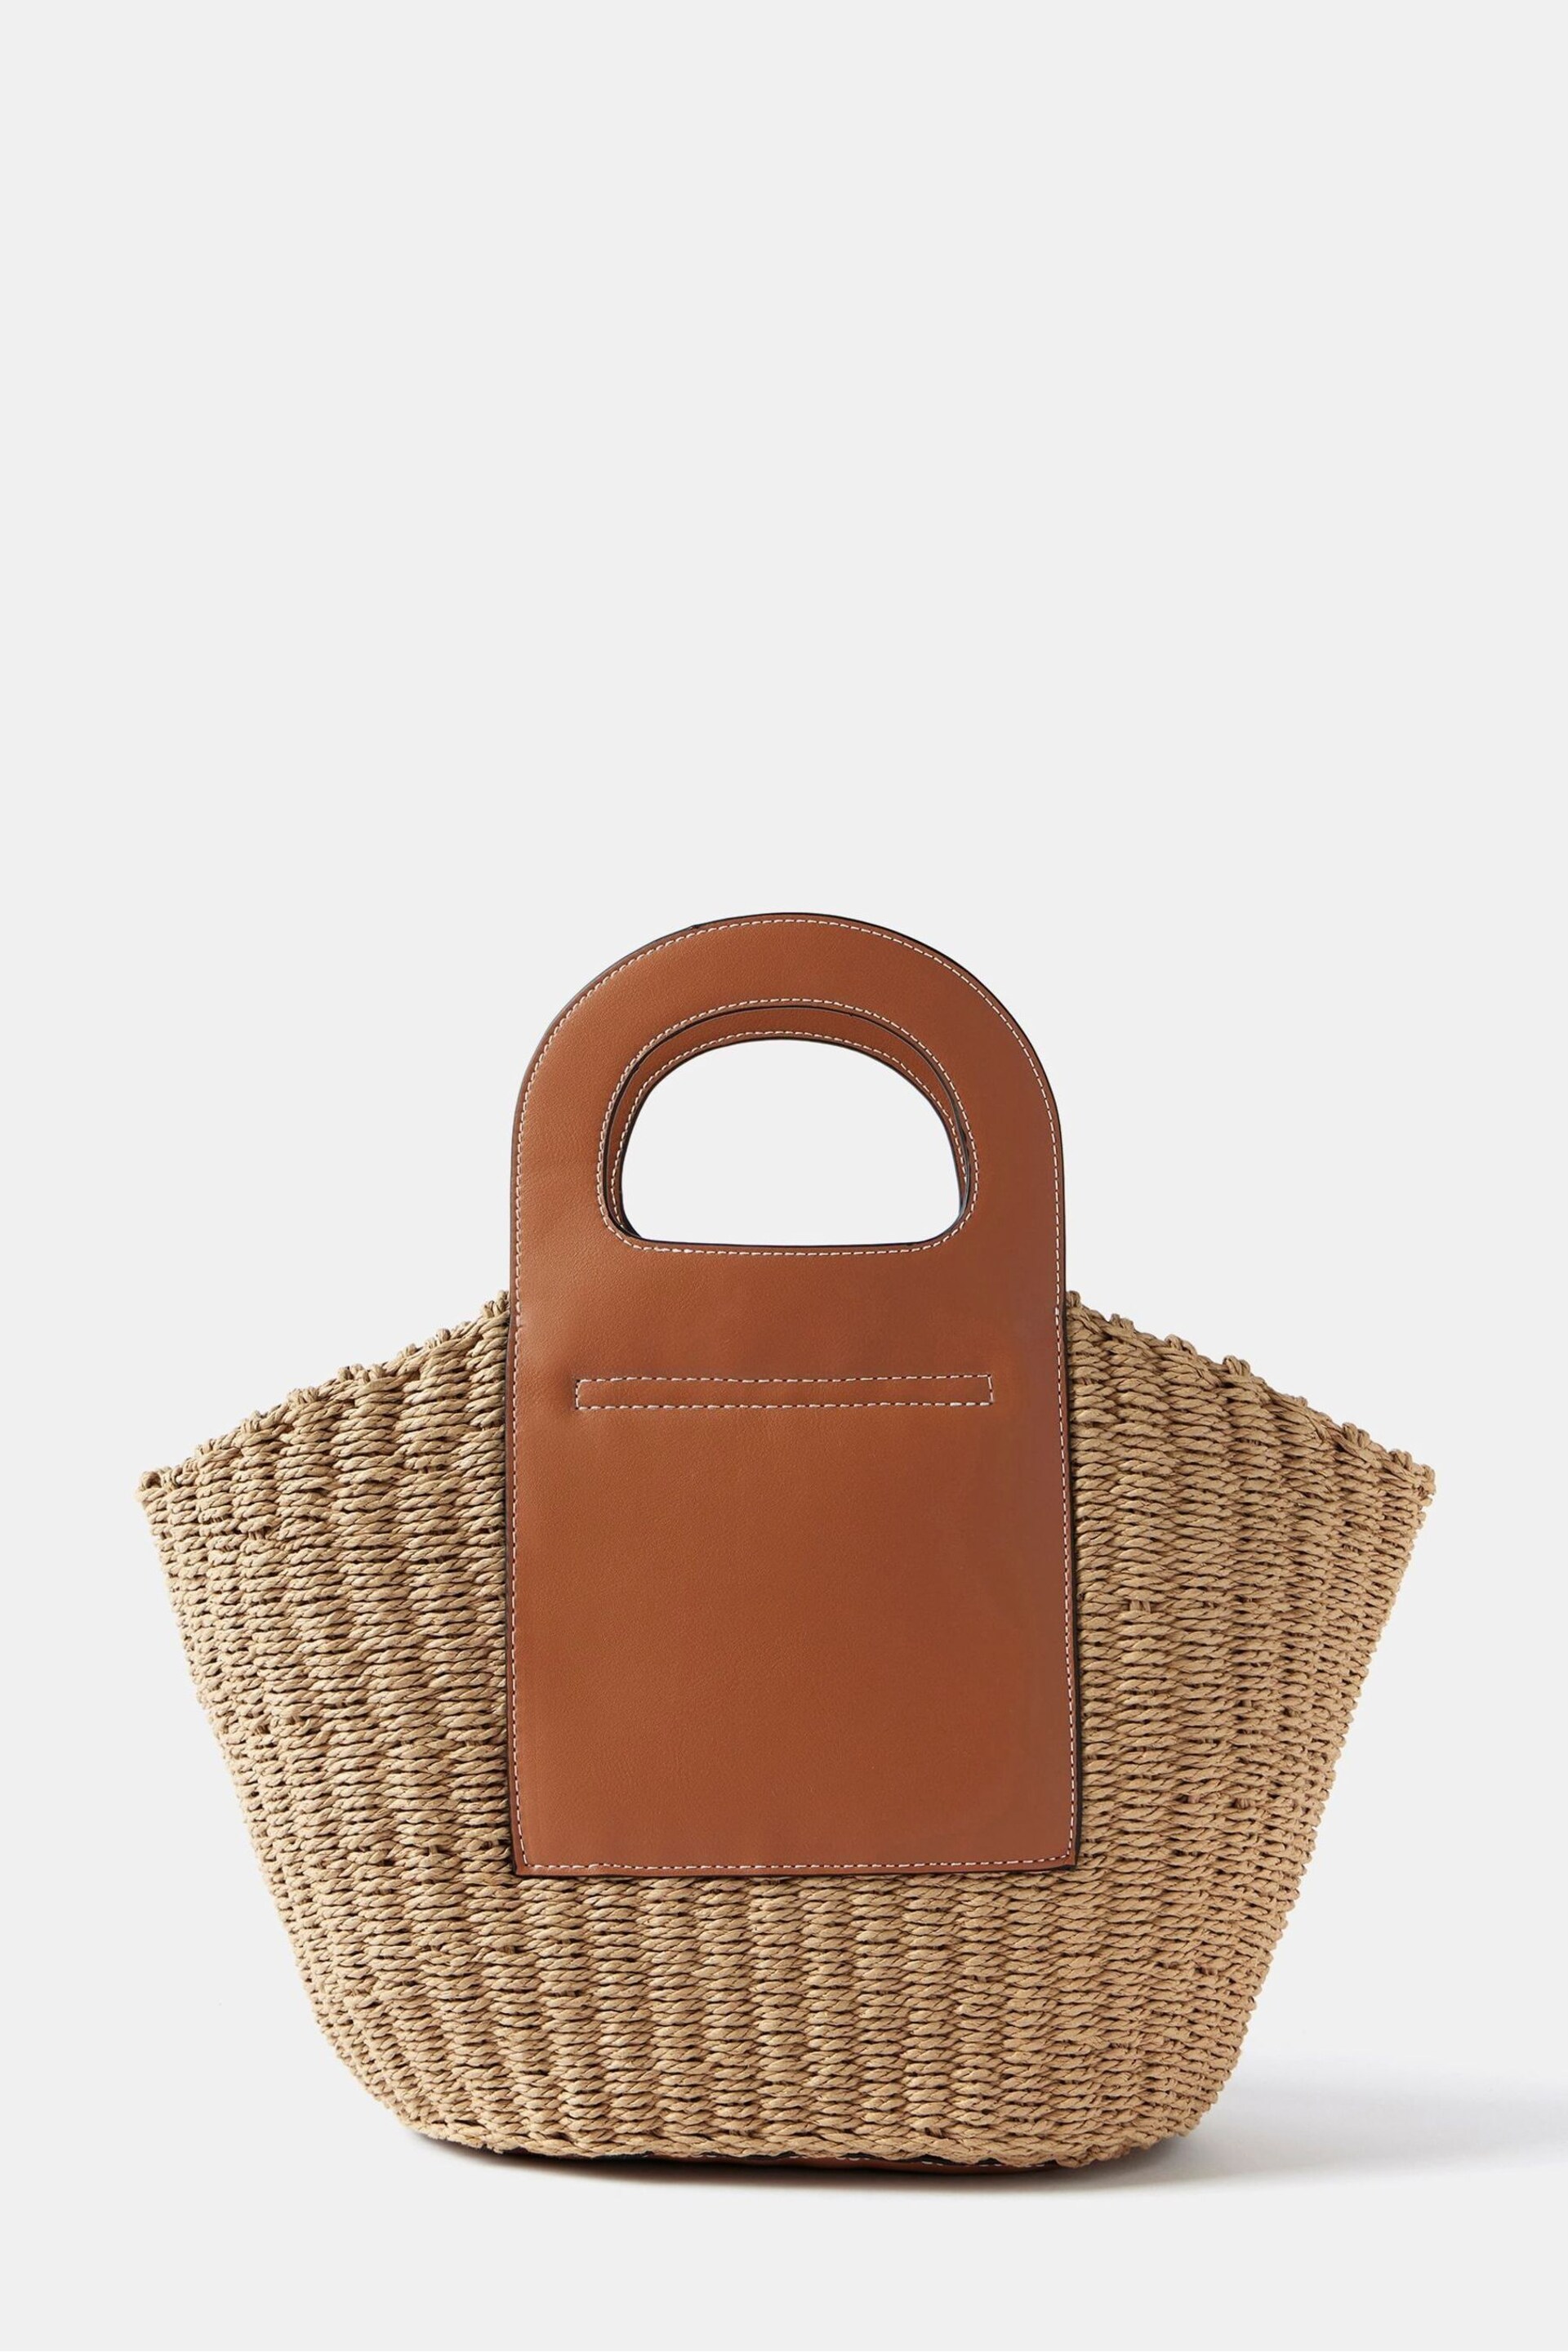 Mint Velvet Brown Leather Woven Basket Bag - Image 2 of 5